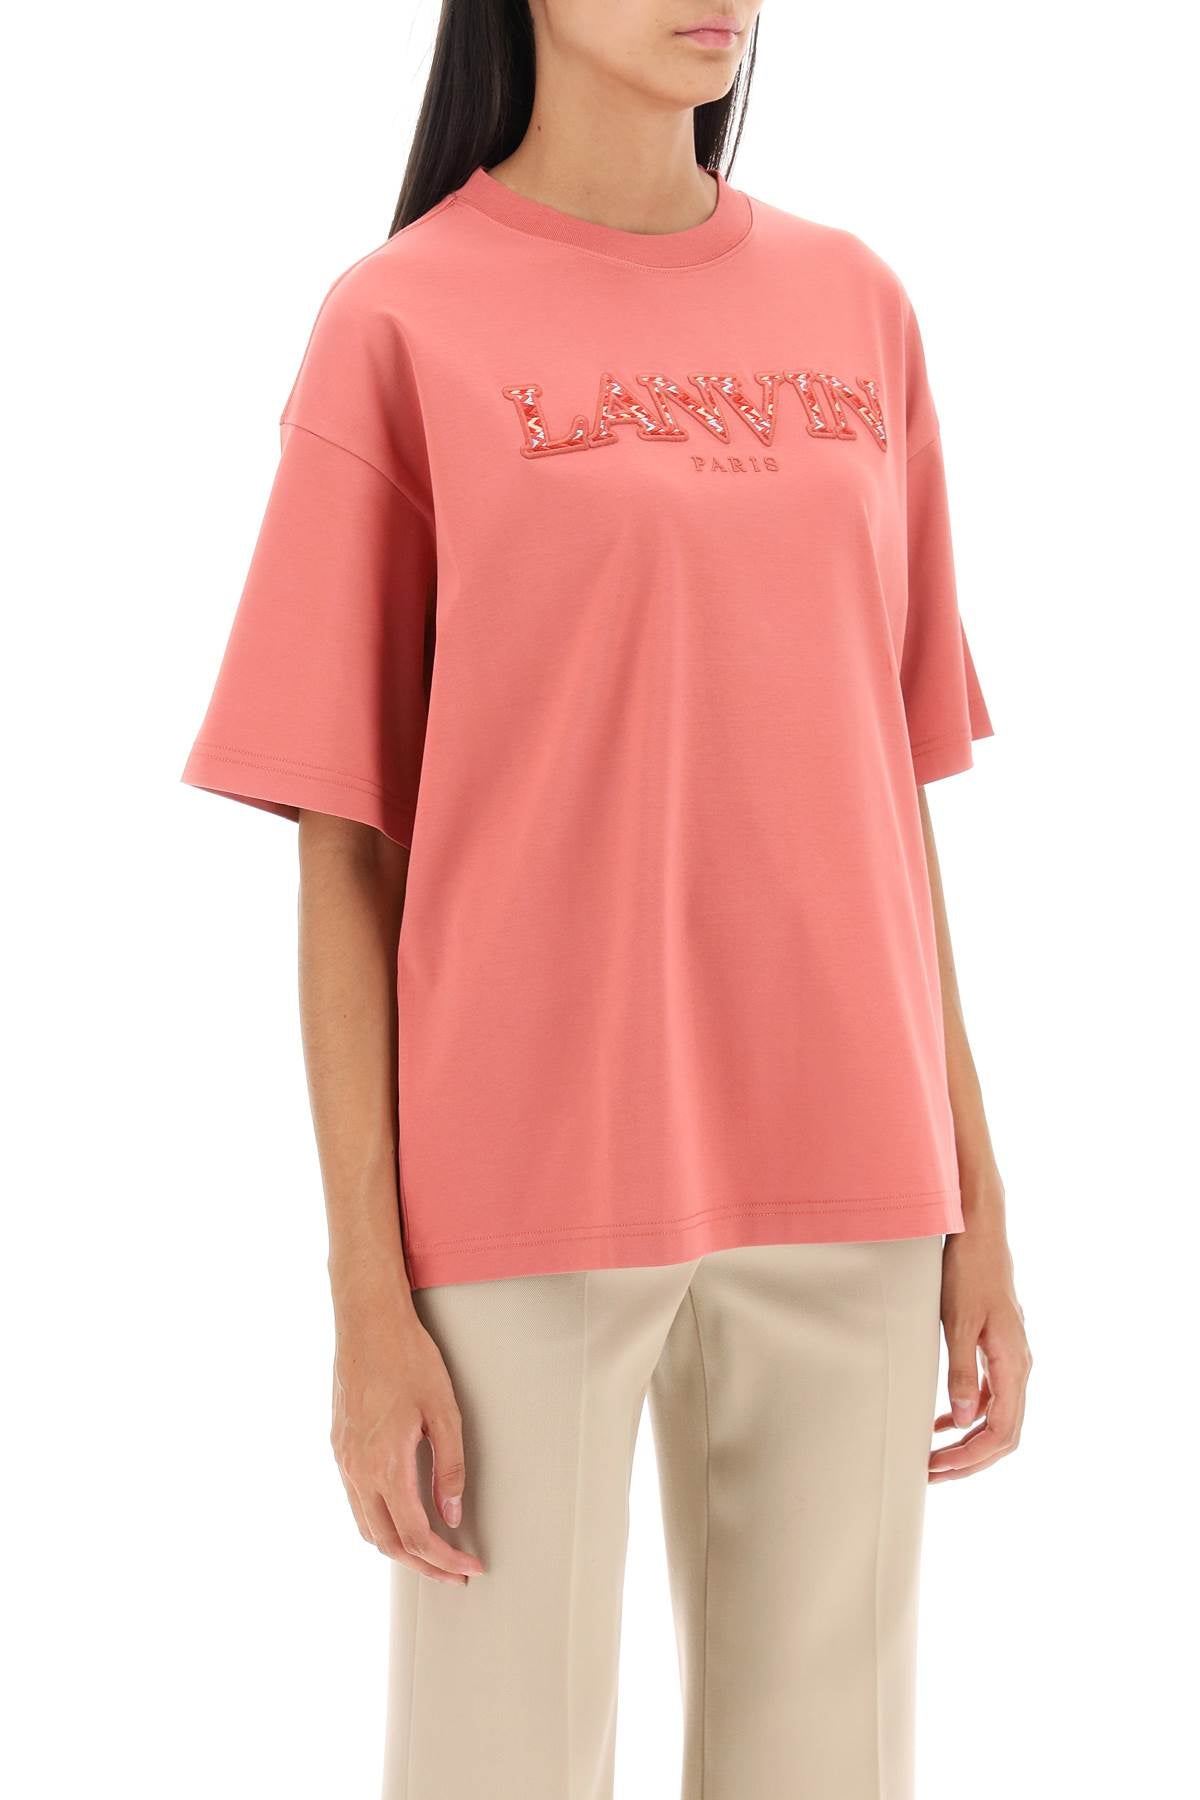 Lanvin curb logo oversized t-shirt-1